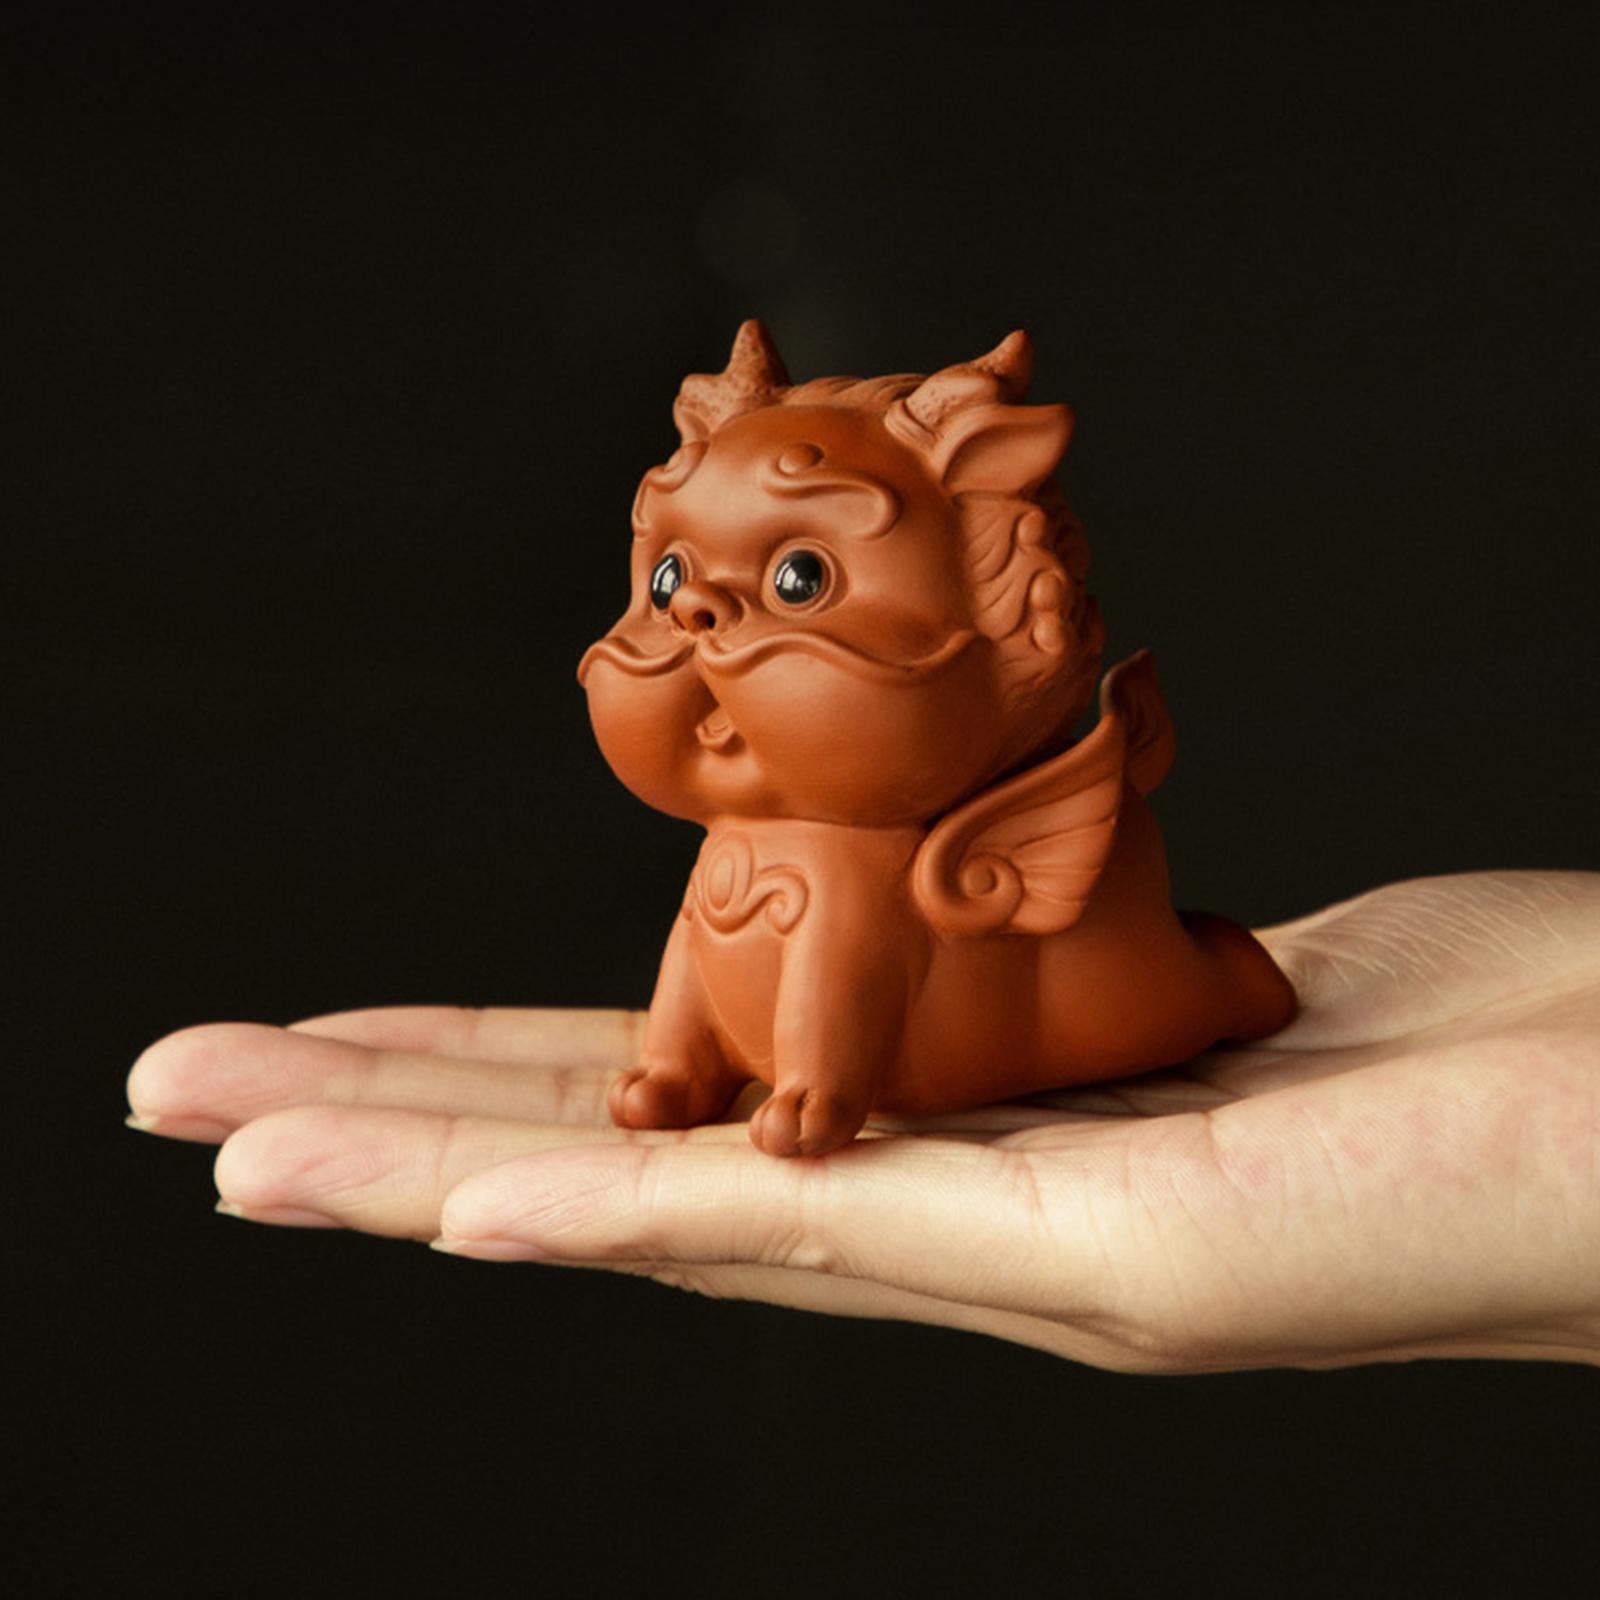 Pixiu Figurine Tea Pet Sculpture Small Pixiu Statue for Bedroom Office Table Red Clay